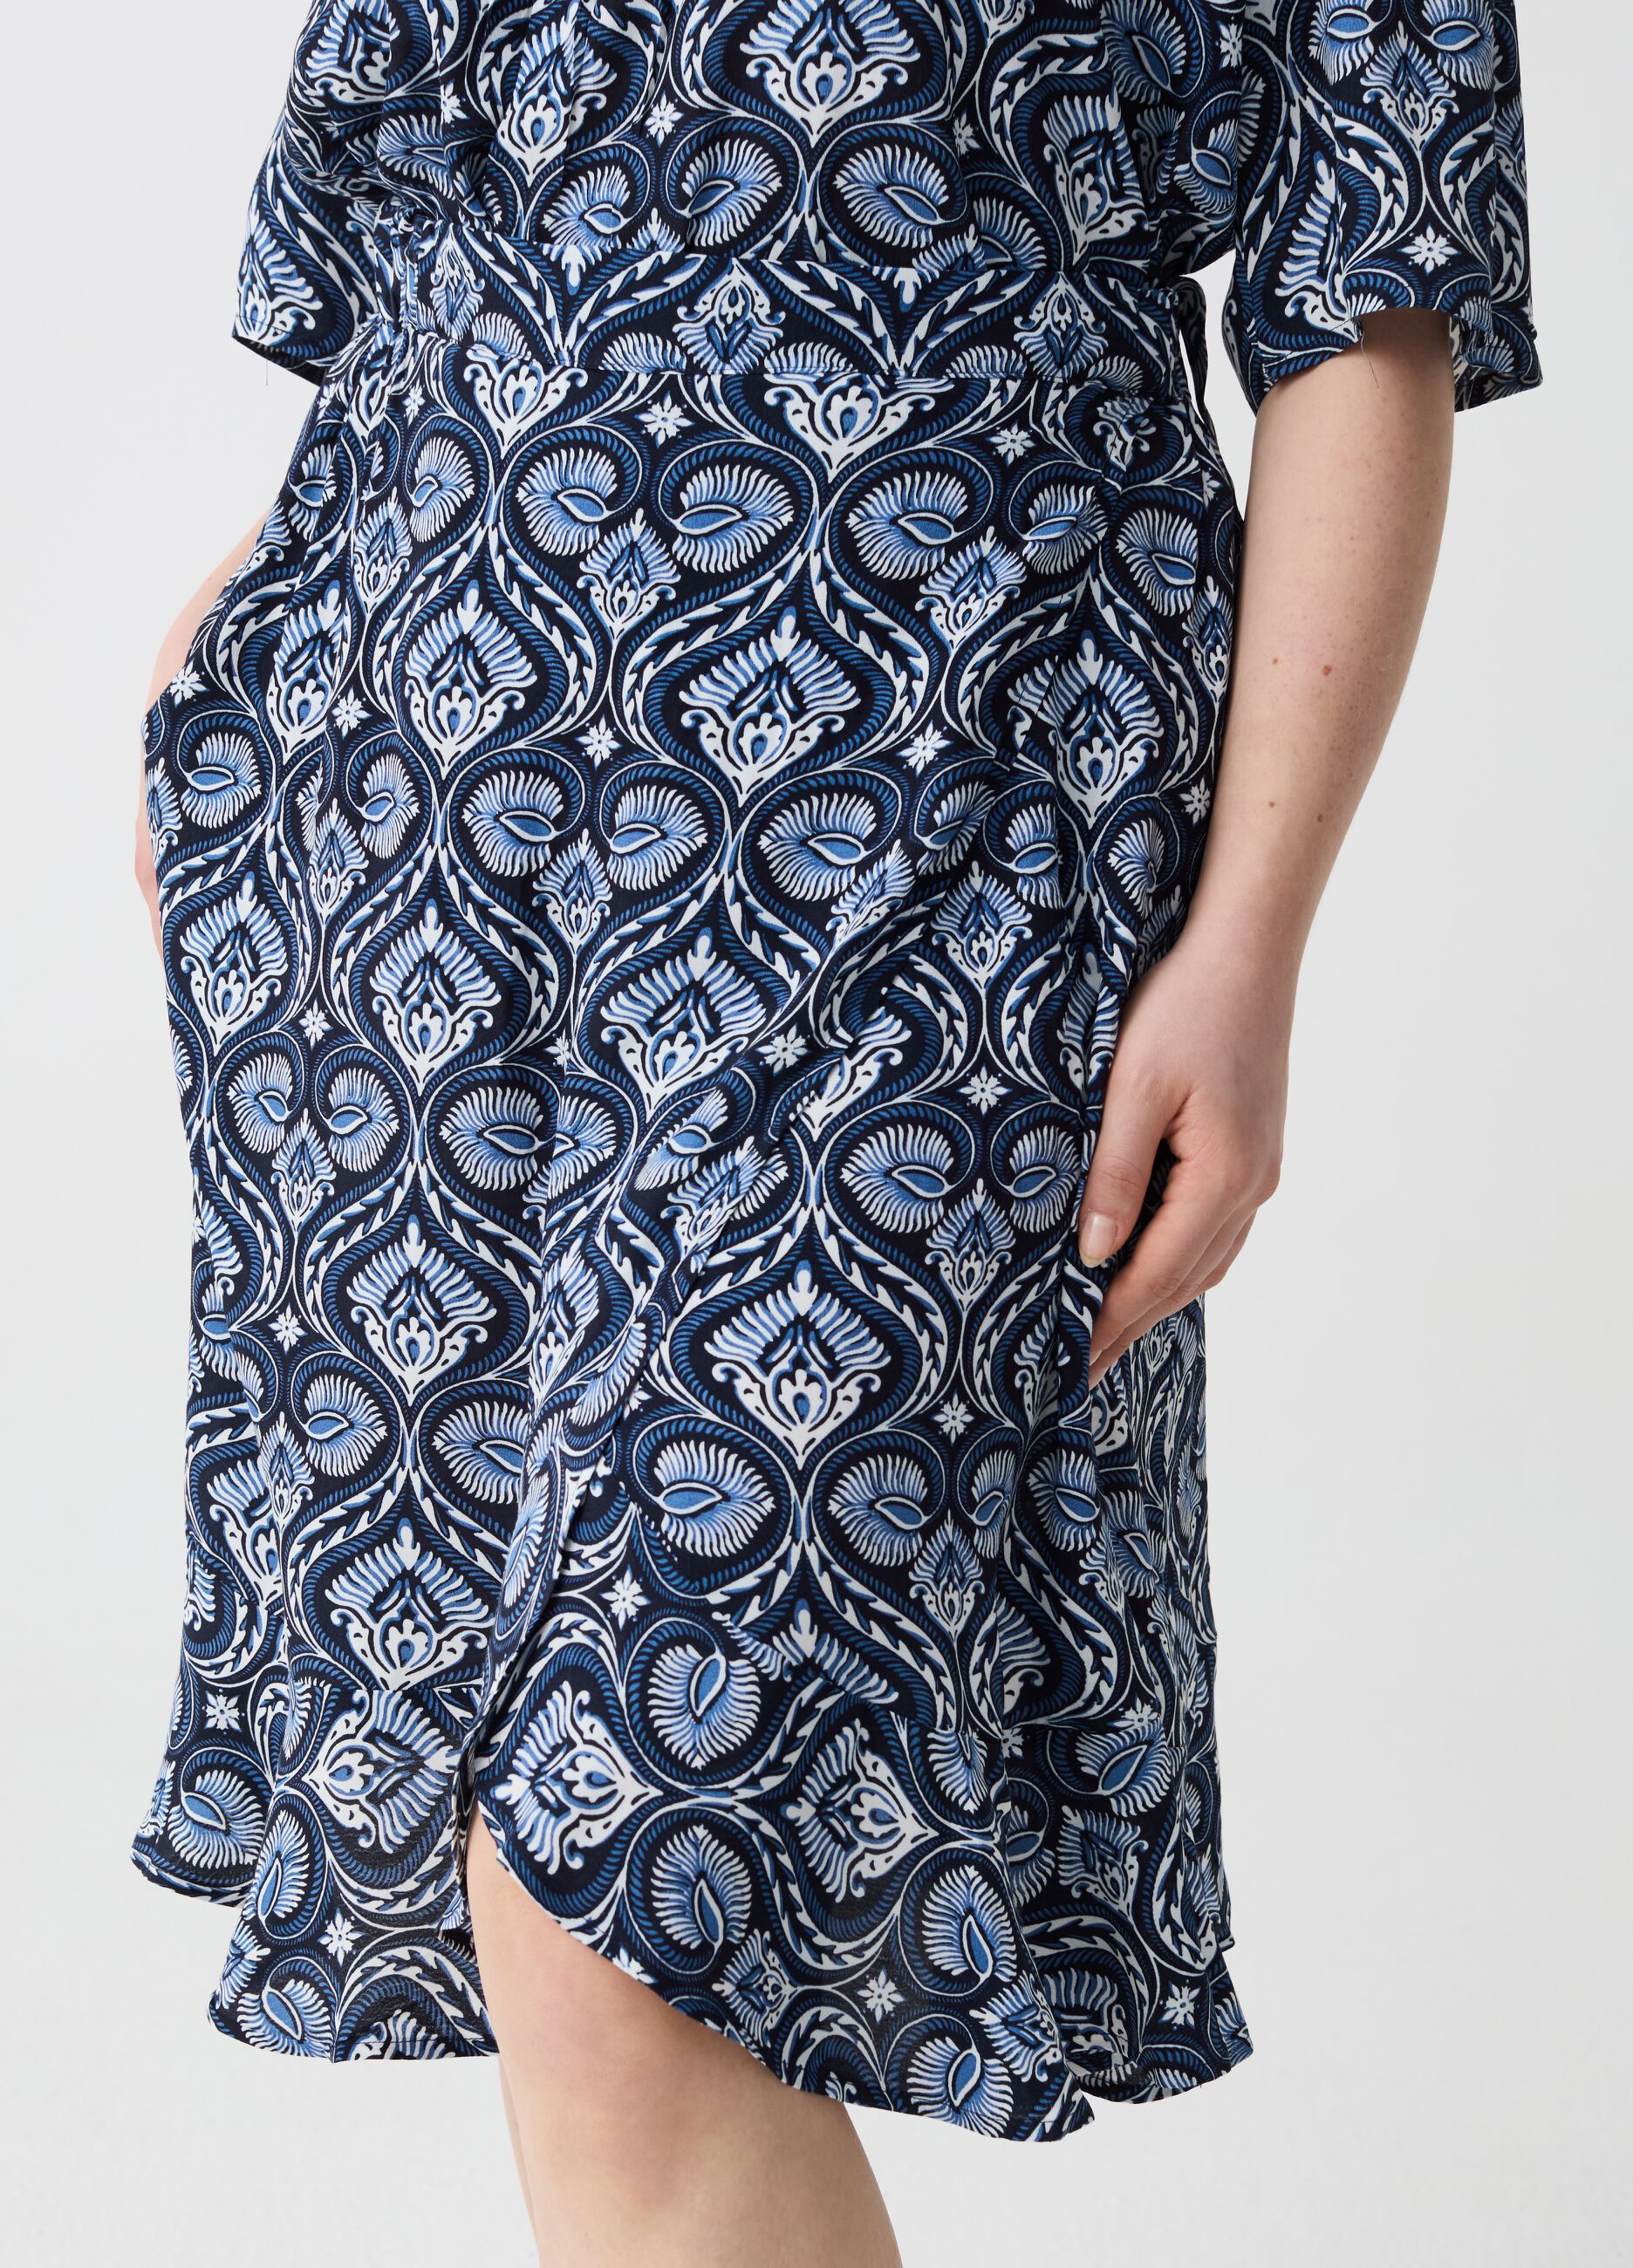 Curvy wraparound skirt with boho pattern